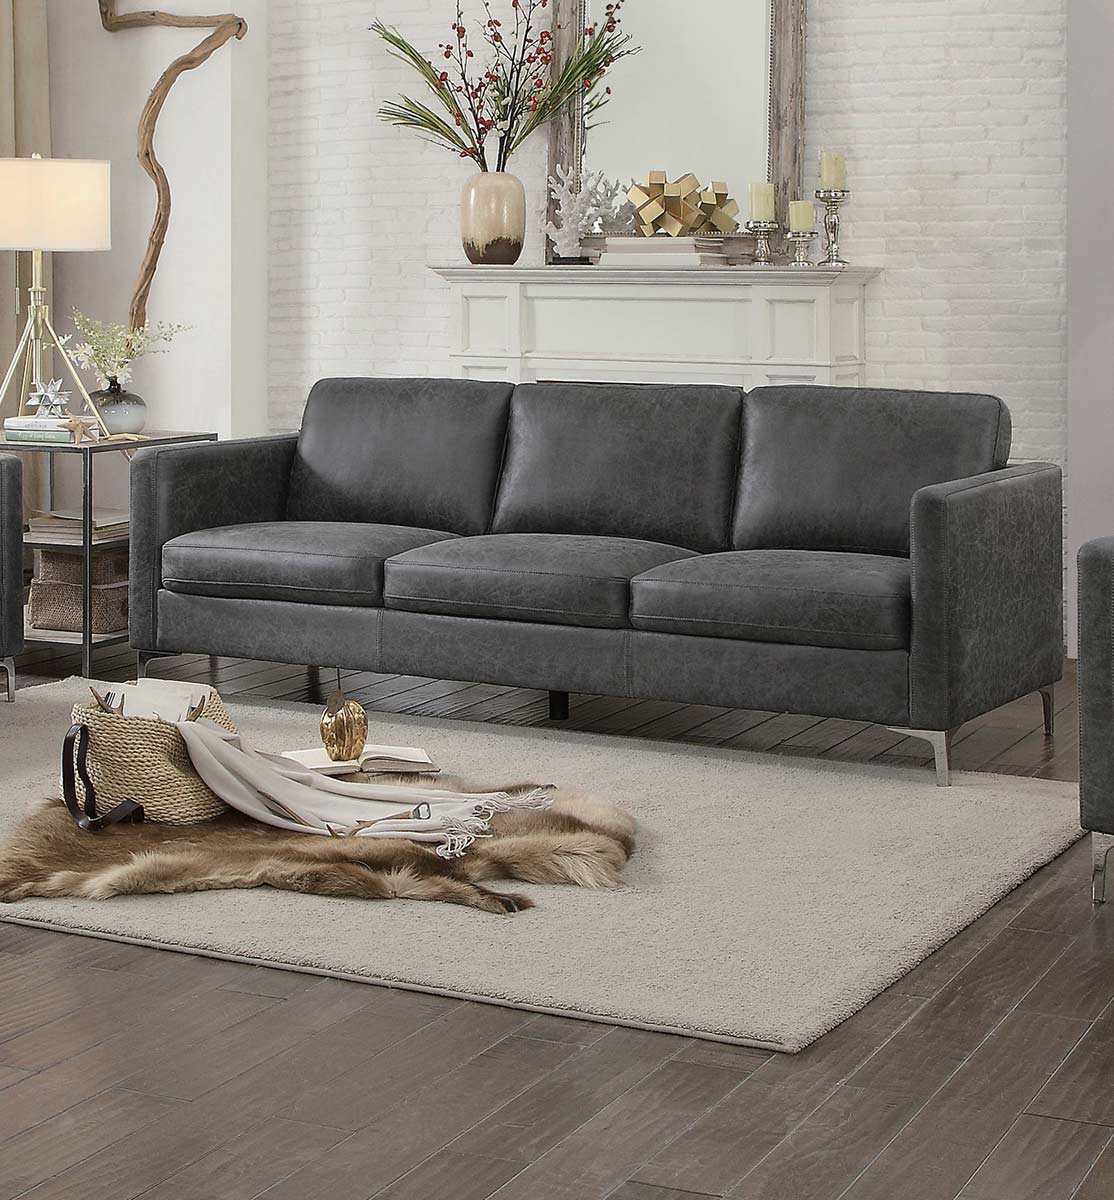 Homelegance Breaux Sofa - Gray Fabric